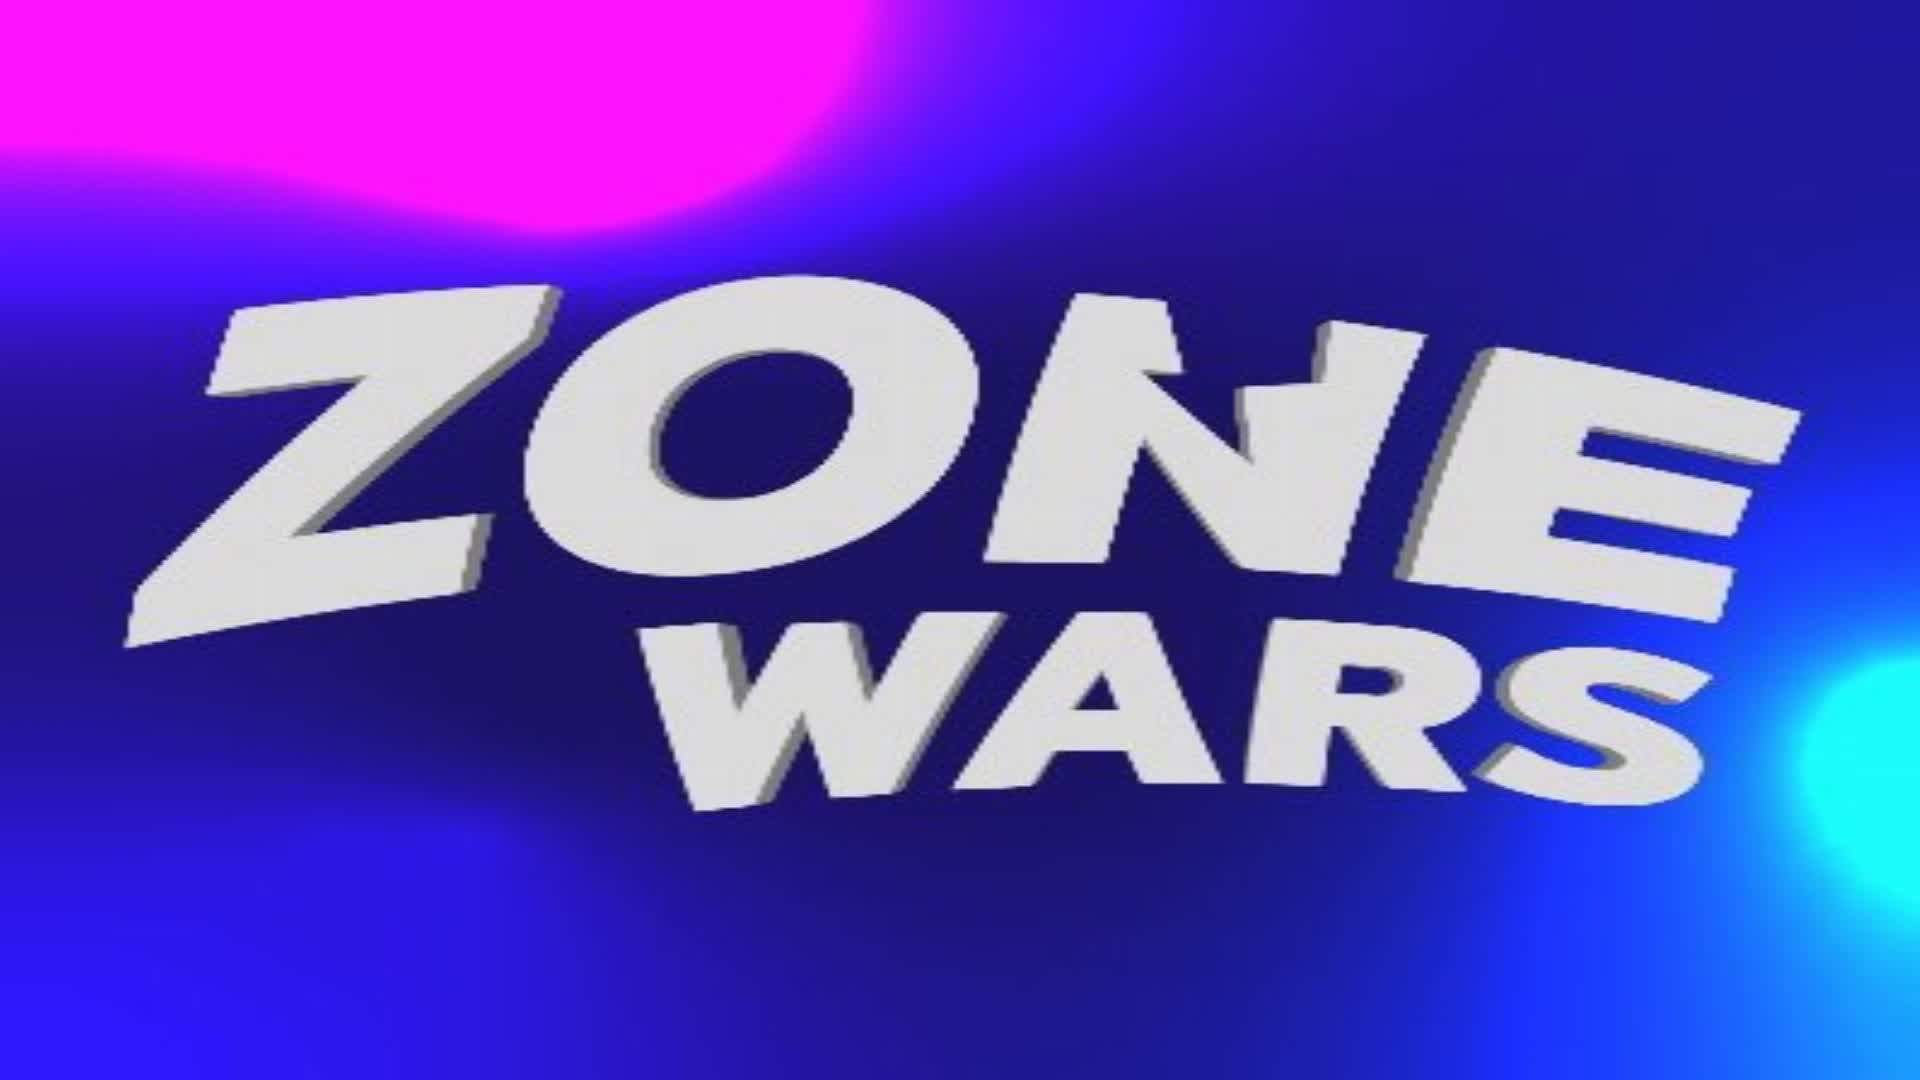 Manly zonewars